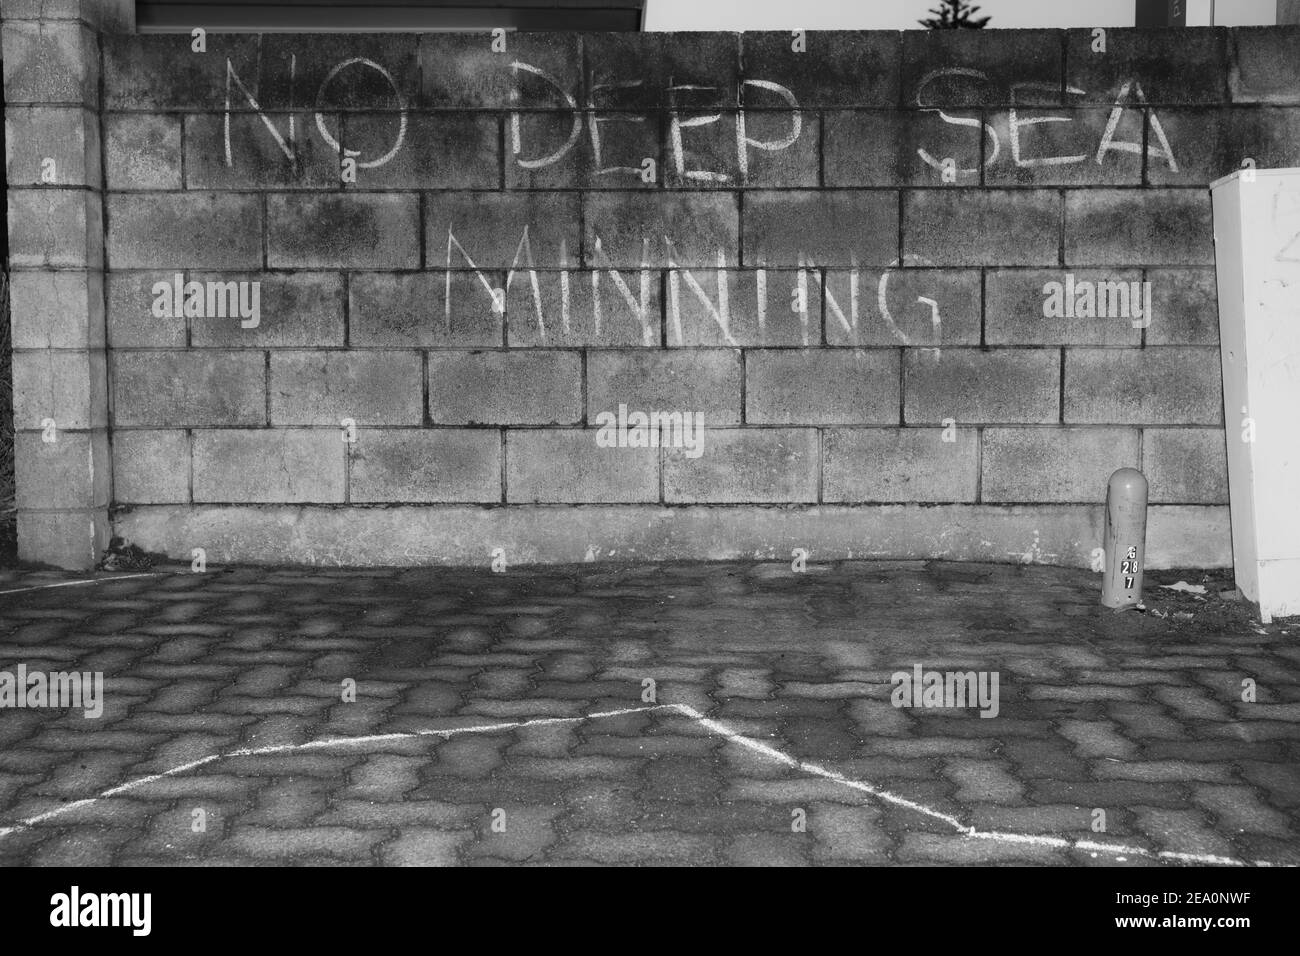 Anti deep water mining misspelt message in chalk on concrete block wall Stock Photo